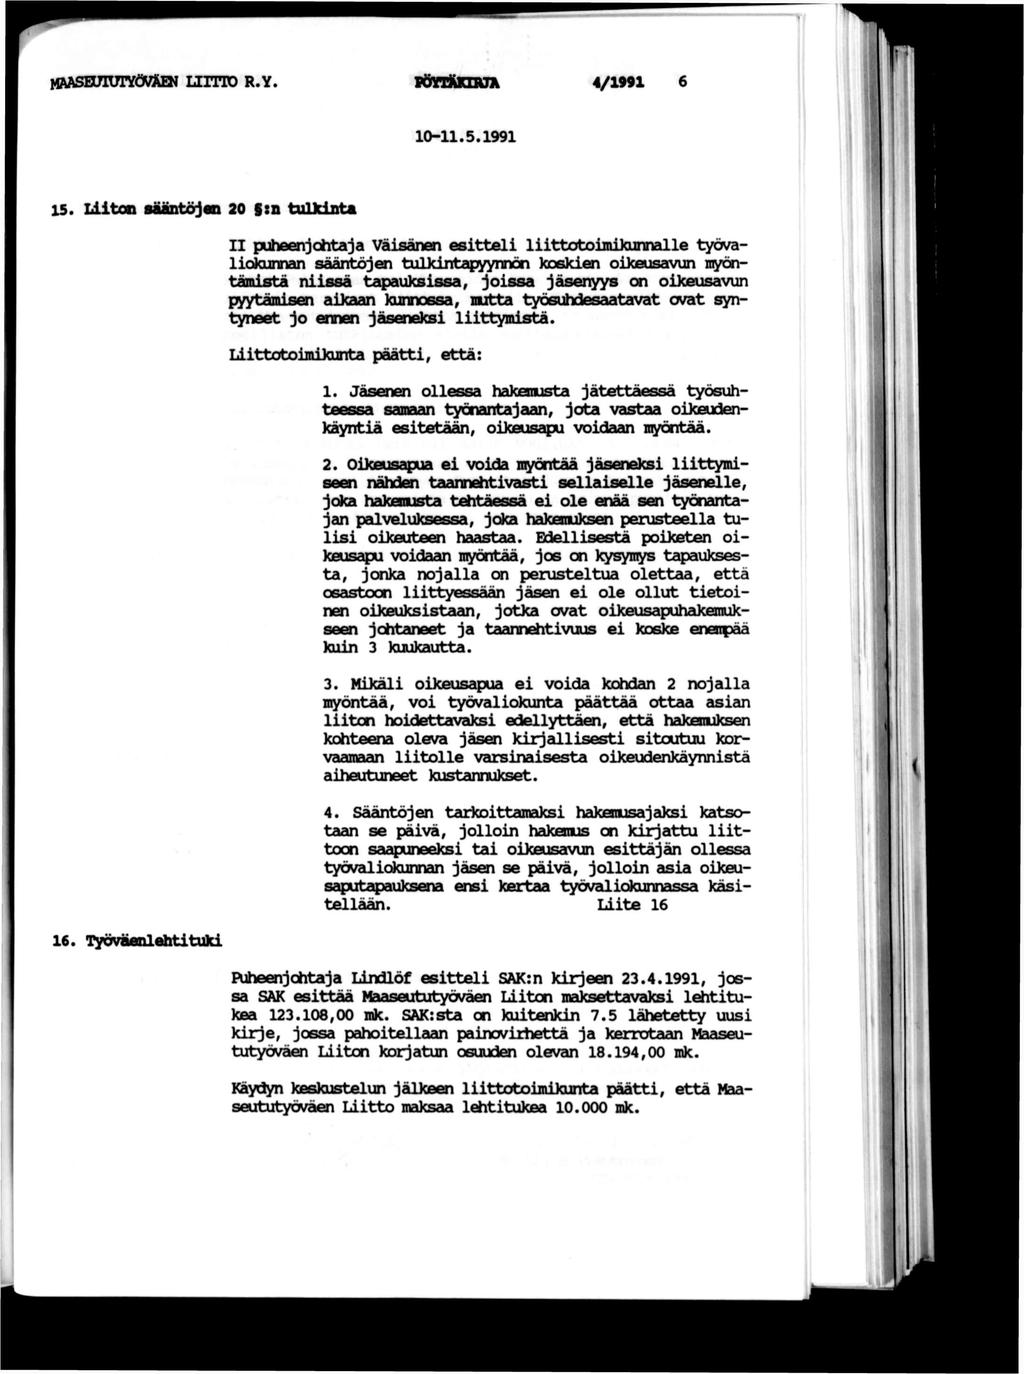 MAASEXTnJY^SVftEK UTFTO R.Y. pöhänöä 4/1991 10-11.5.1991 15. Lton sääntöjen 20 Stn tuudnu 16.